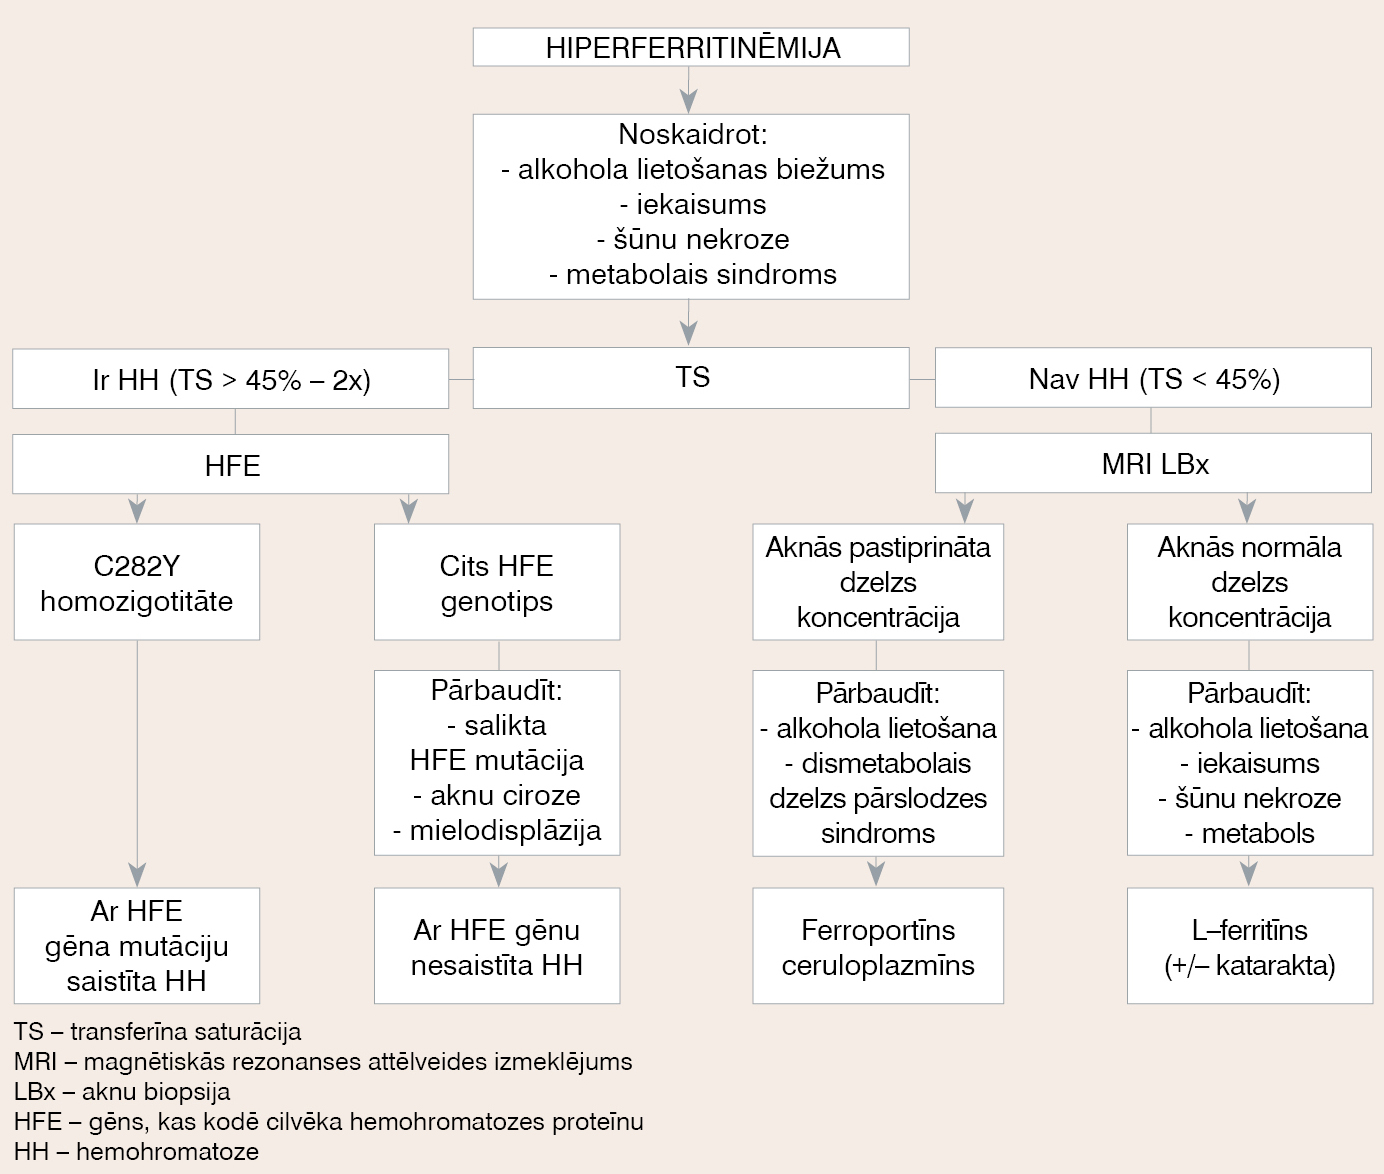 Hemohromatozes diagnostika (pēc European Association for the Study of the Liver, European Association for the Study of the Liver Clinical Practice Guidelines for HFE Hemochromatosis, 2010)